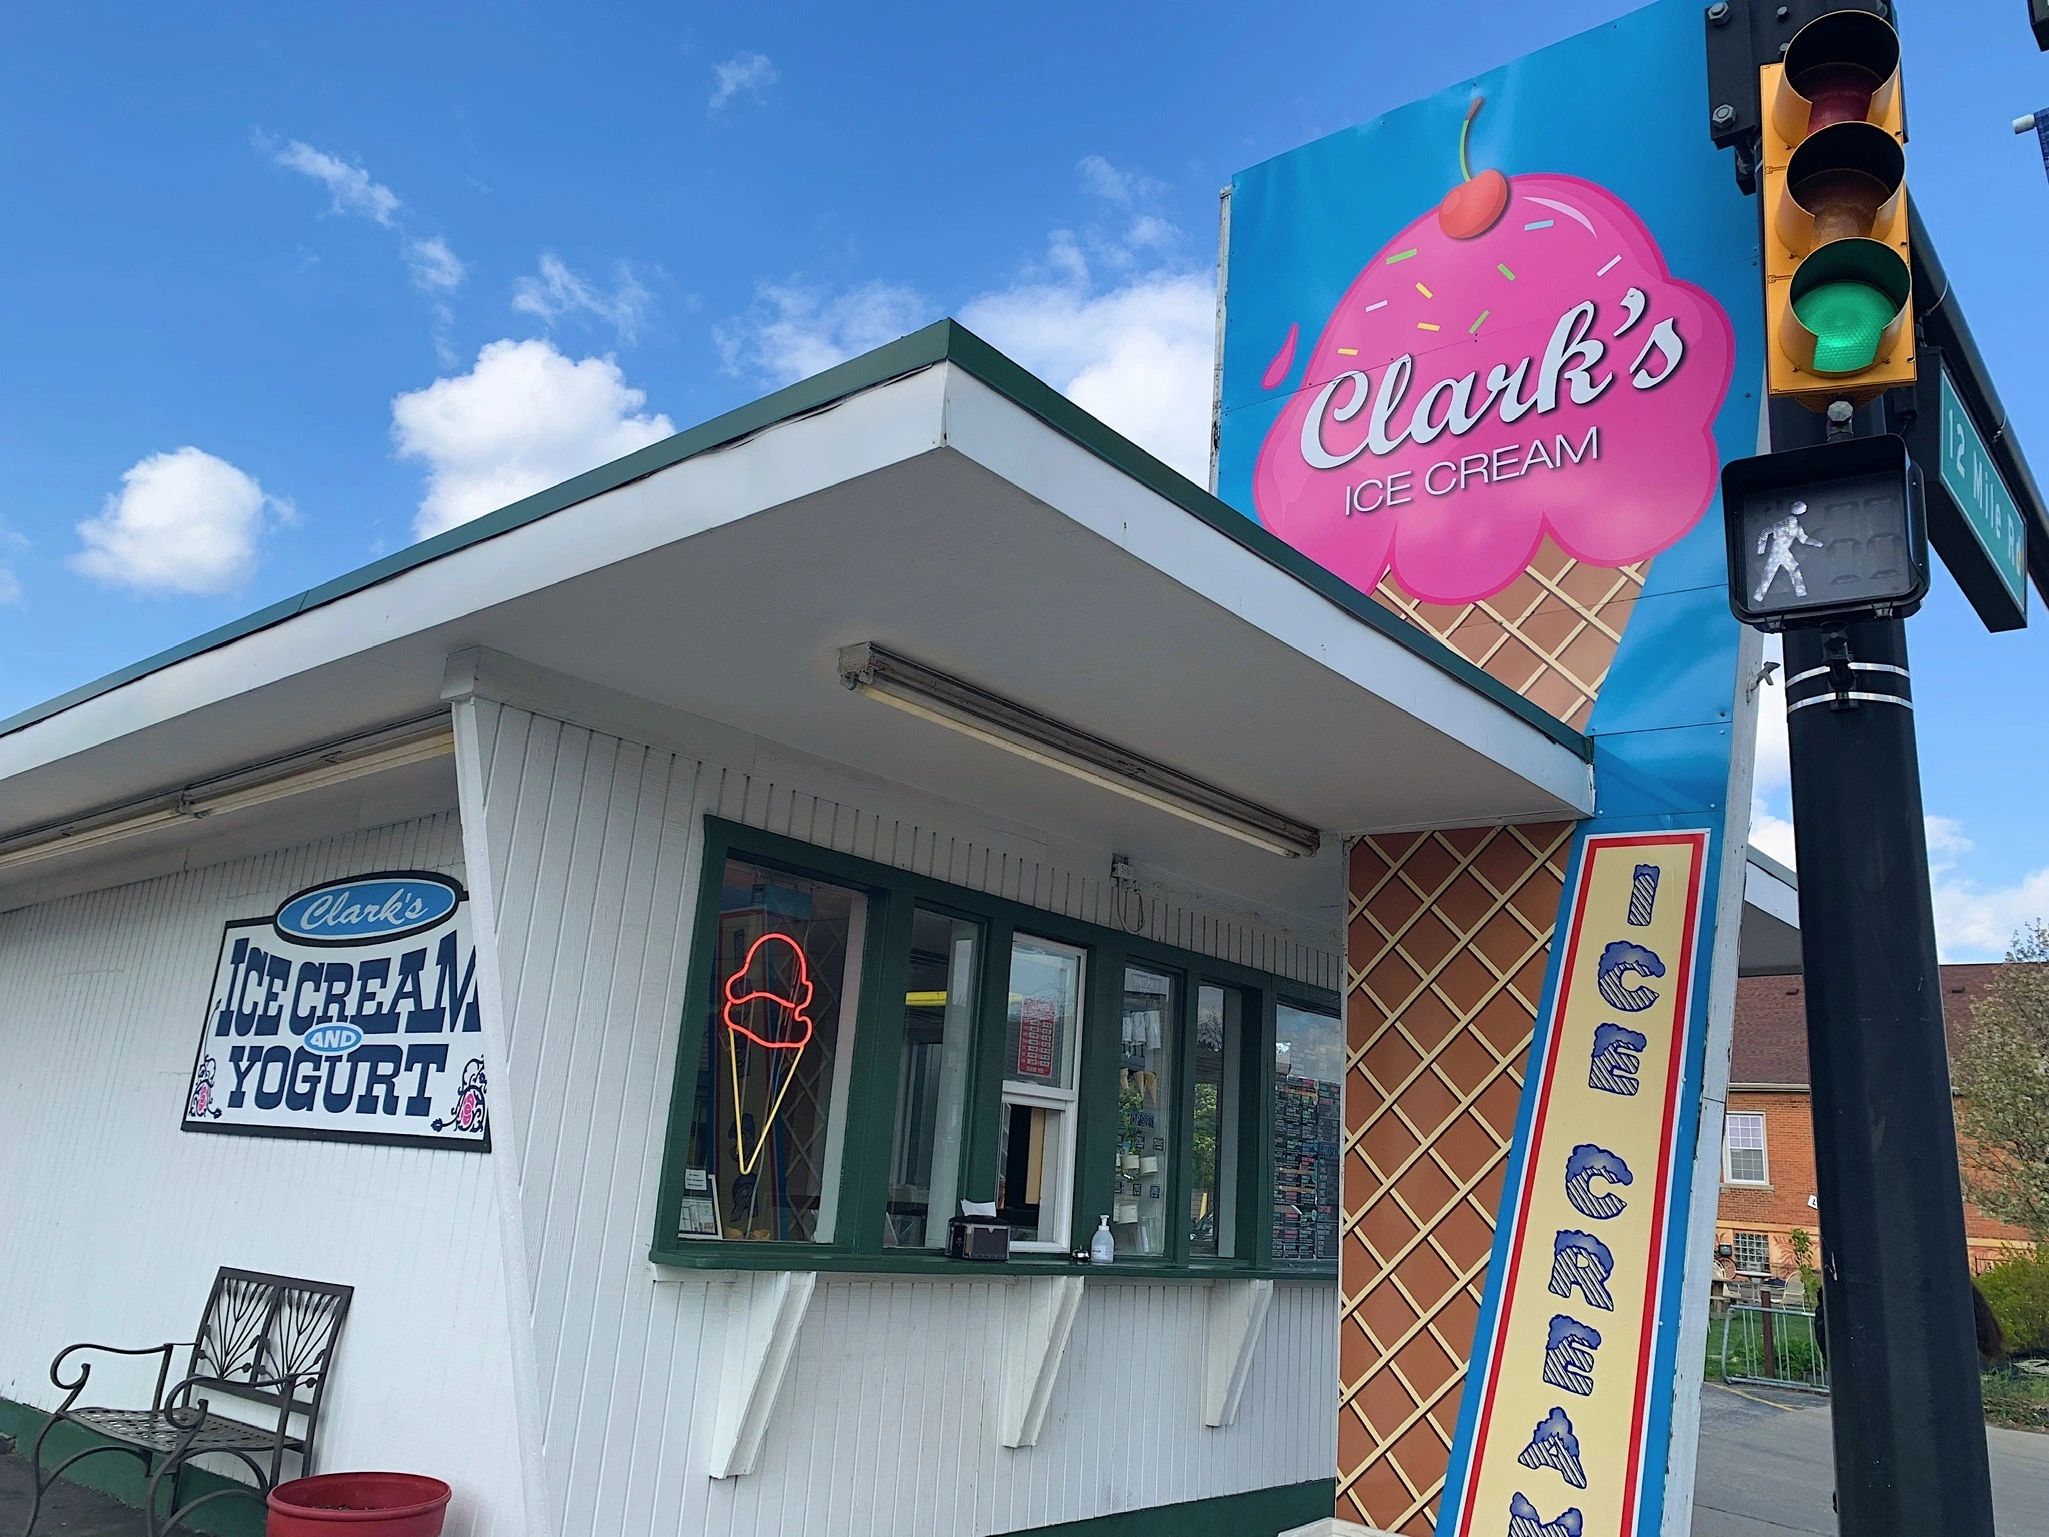 Clark's Ice Cream